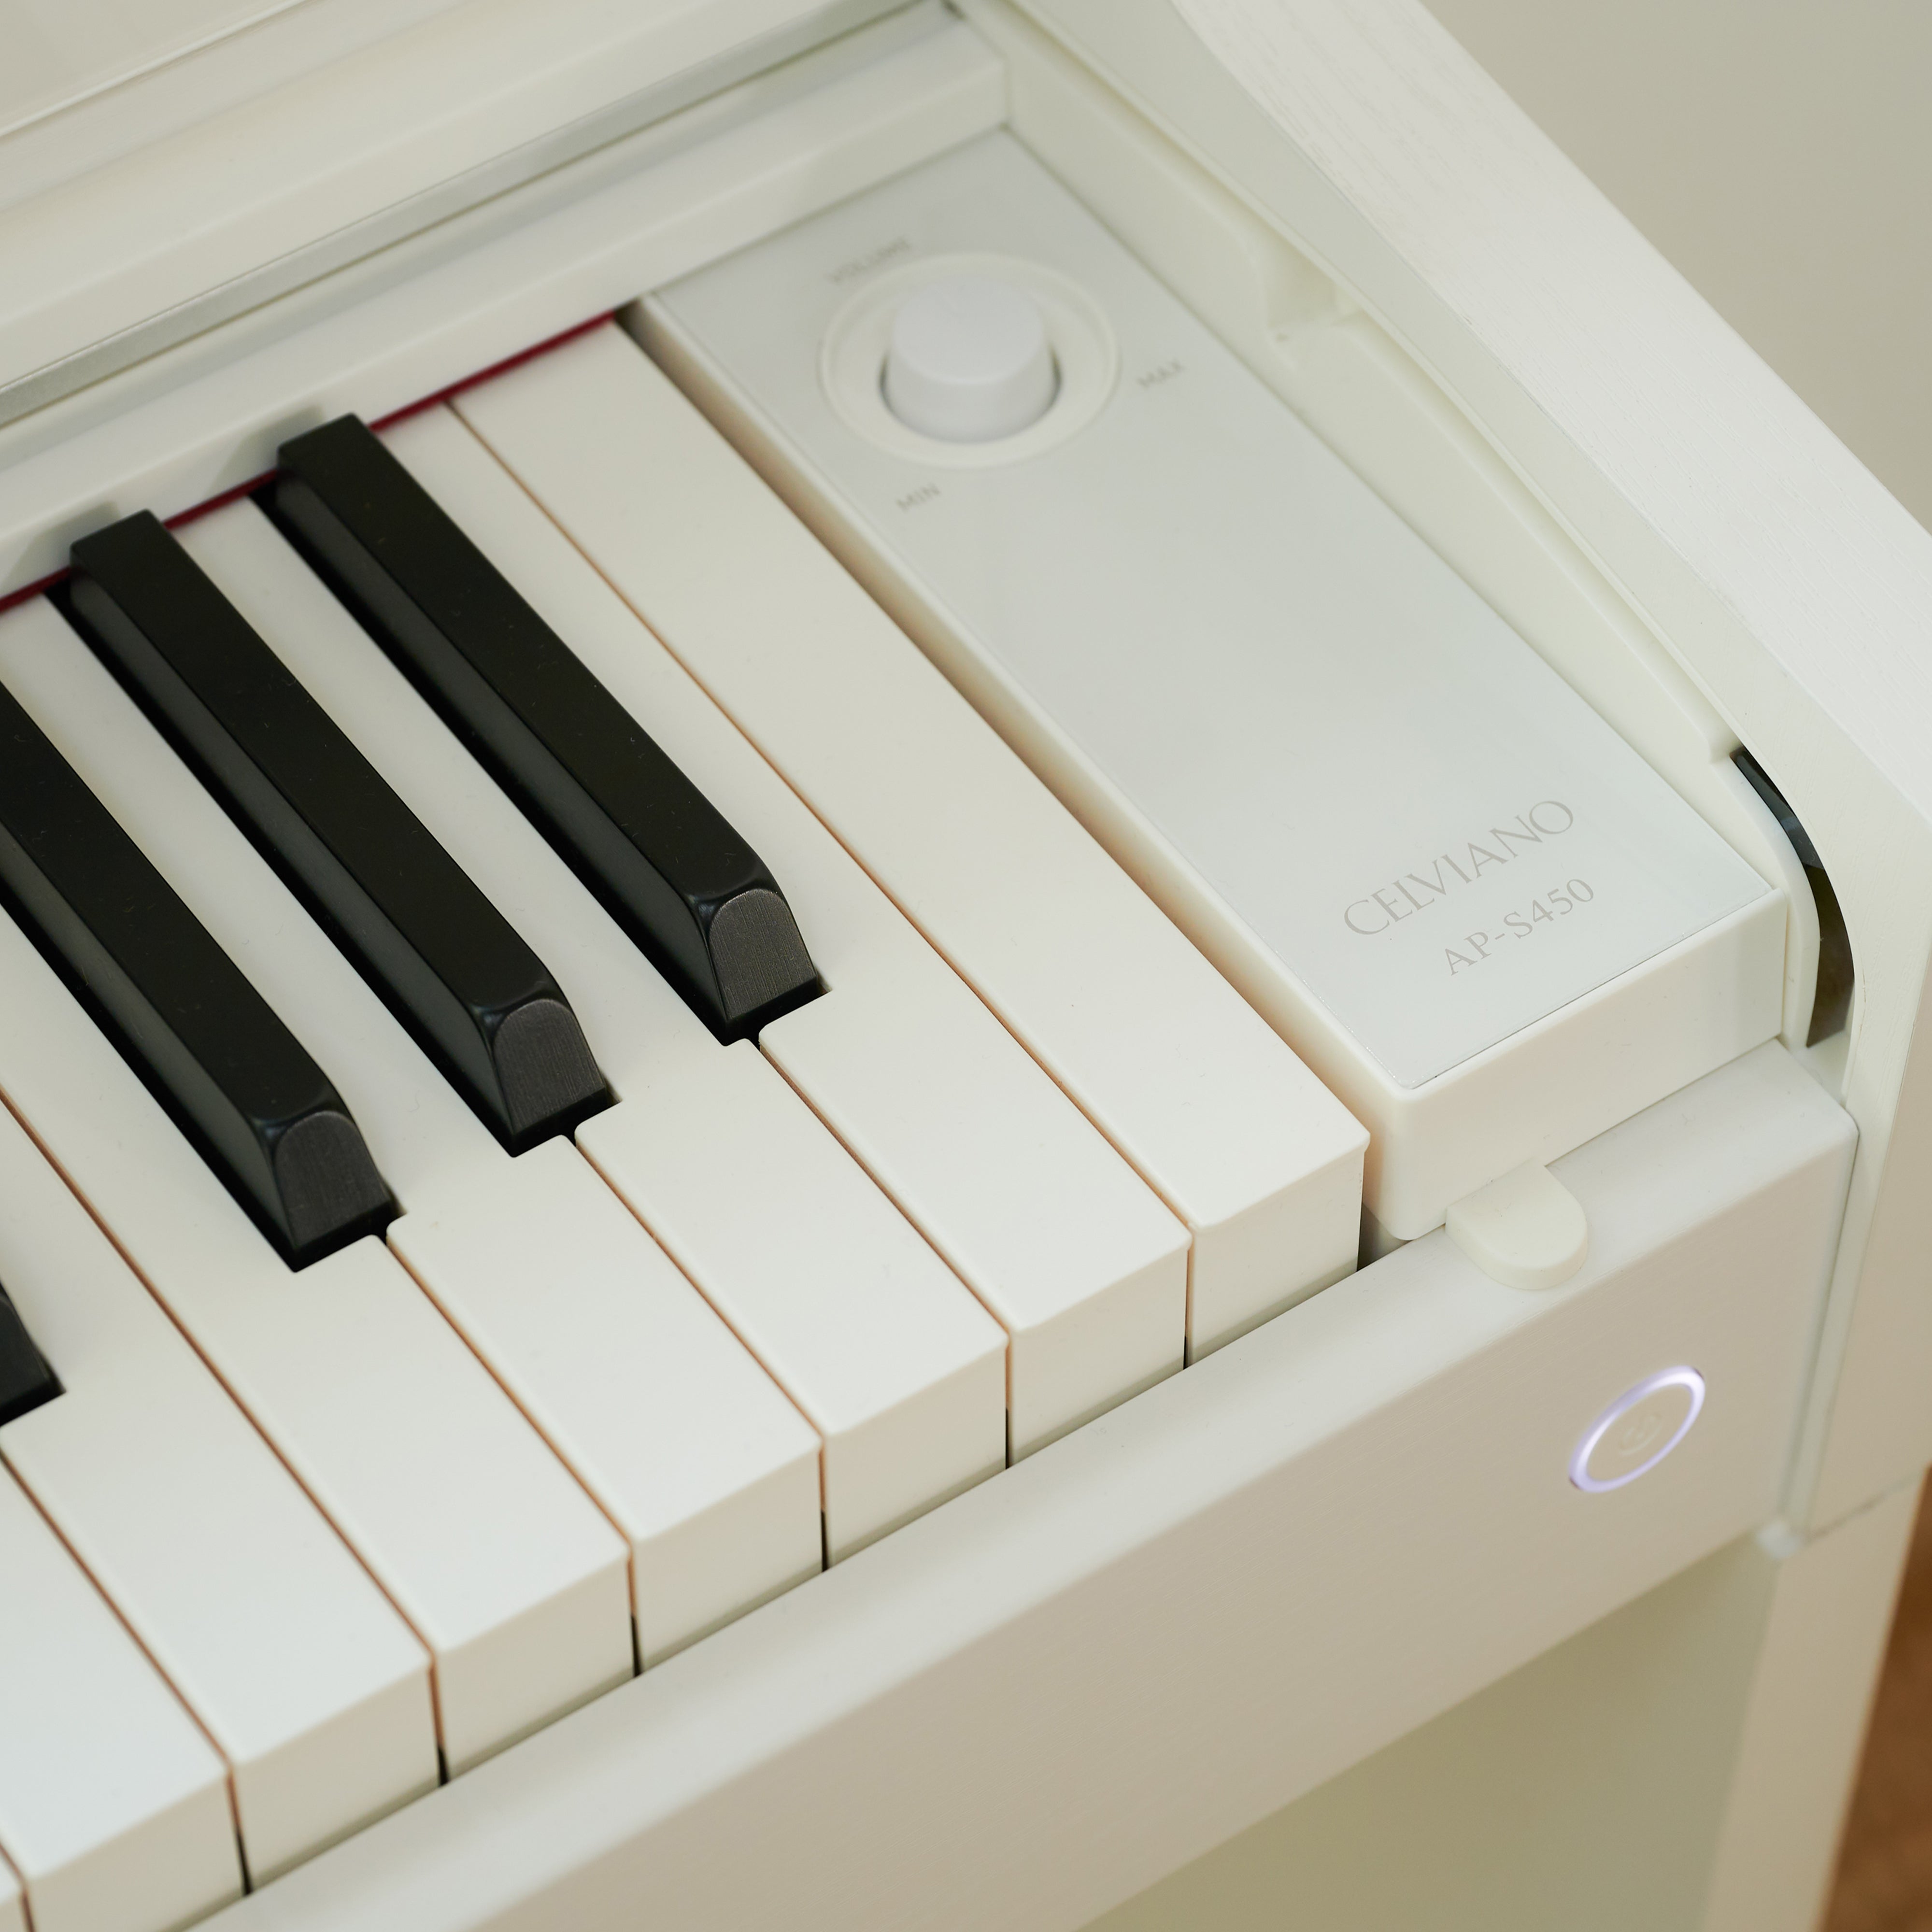 Casio Celviano AP-S450 Digital Piano - White - power and volume controls